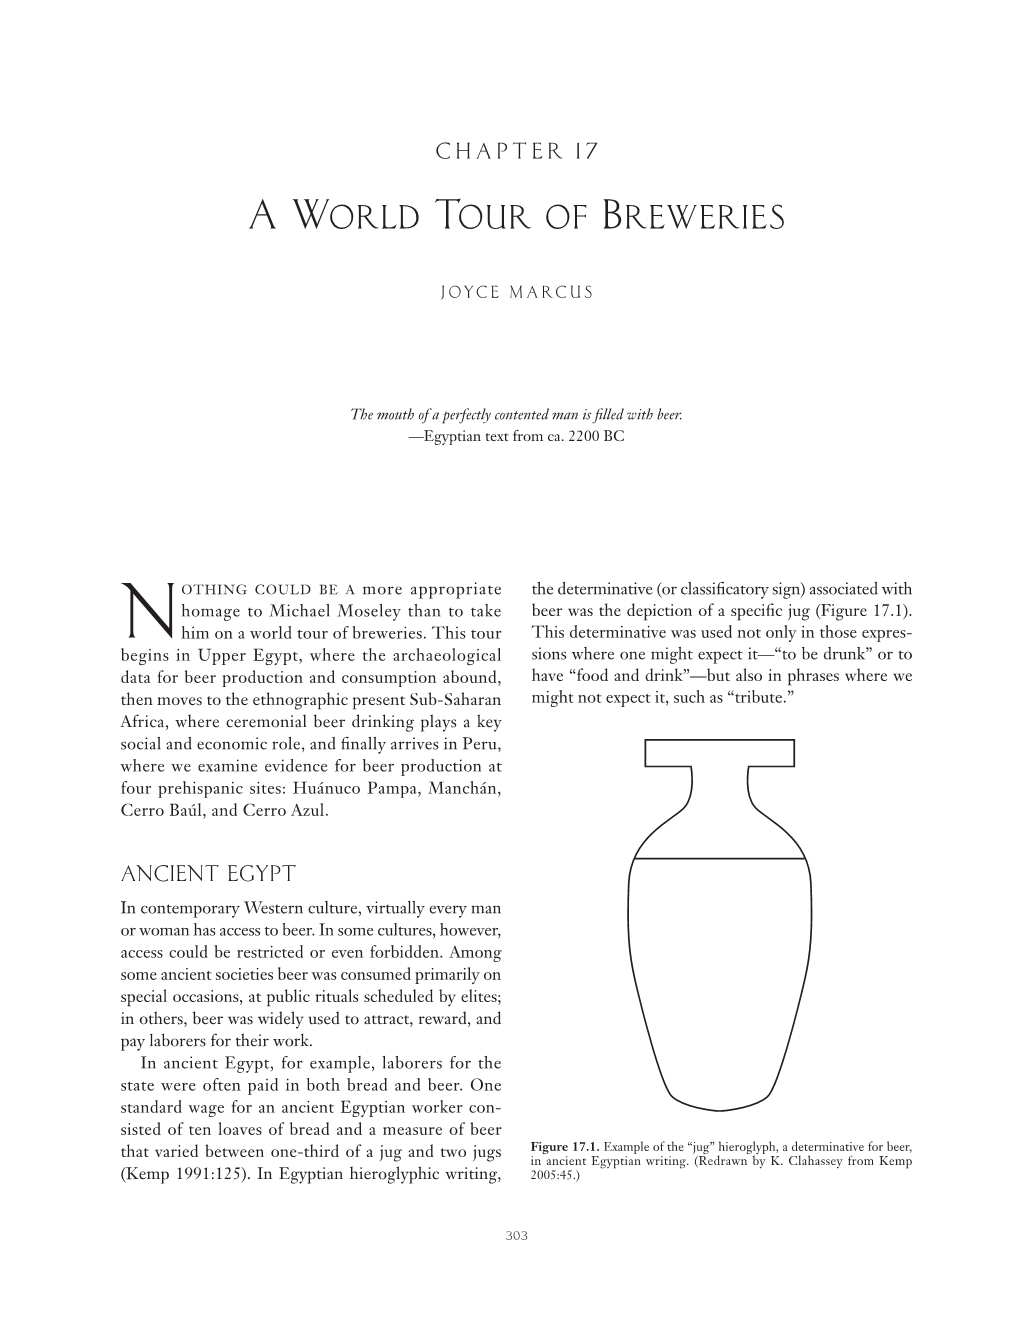 A World Tour of Breweries